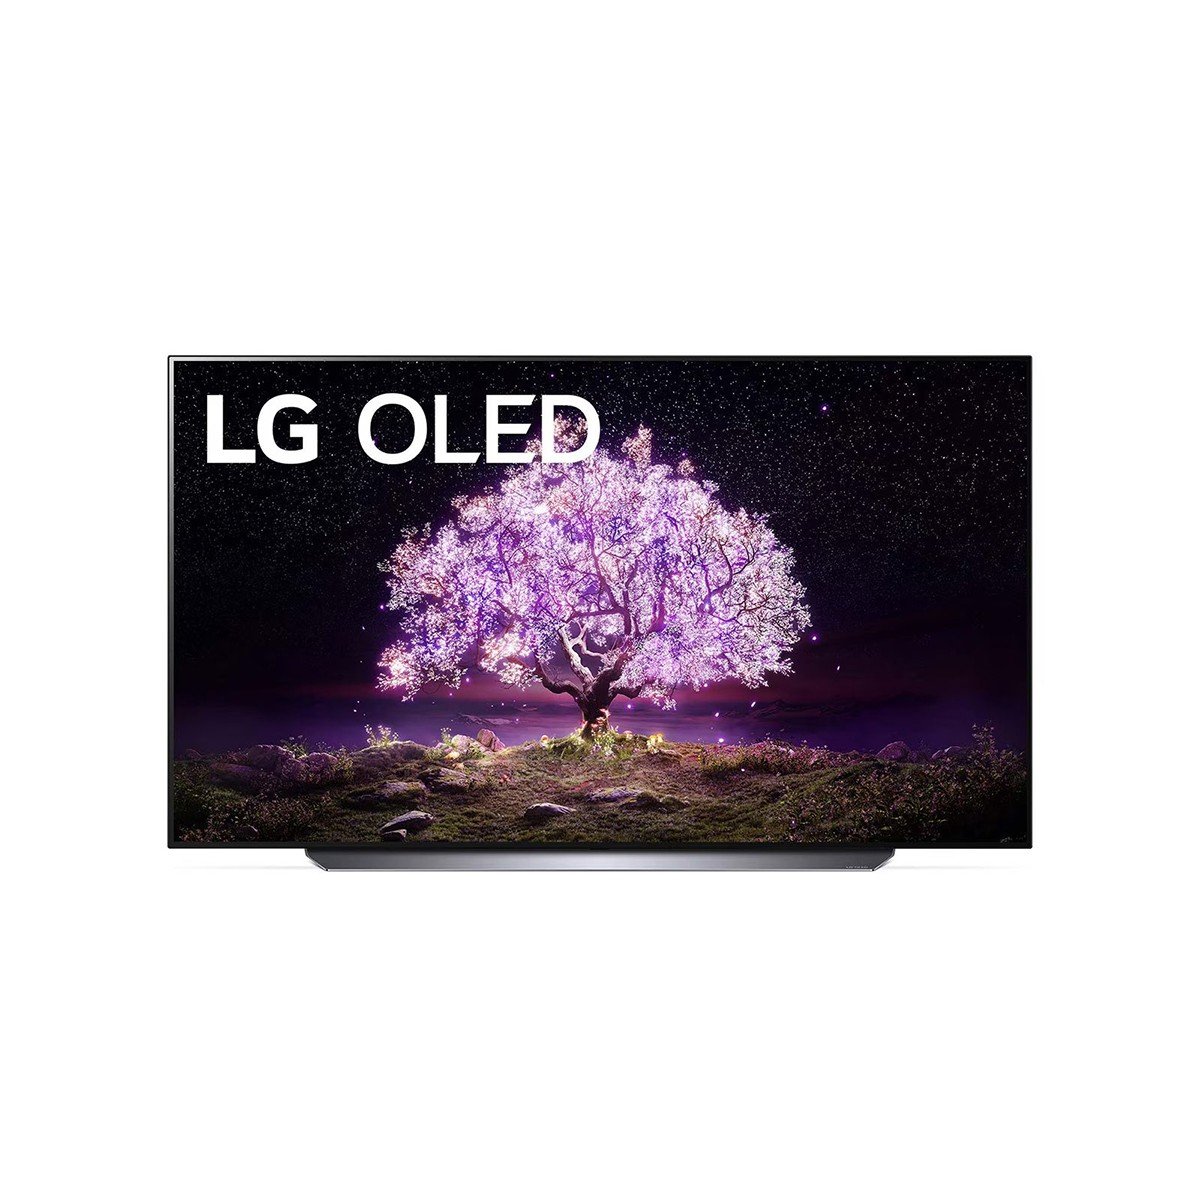 LG OLED TV 48 Inch C1 Series, Cinema Screen Design 4K Cinema HDR WebOS Smart AI ThinQ Pixel Dimming